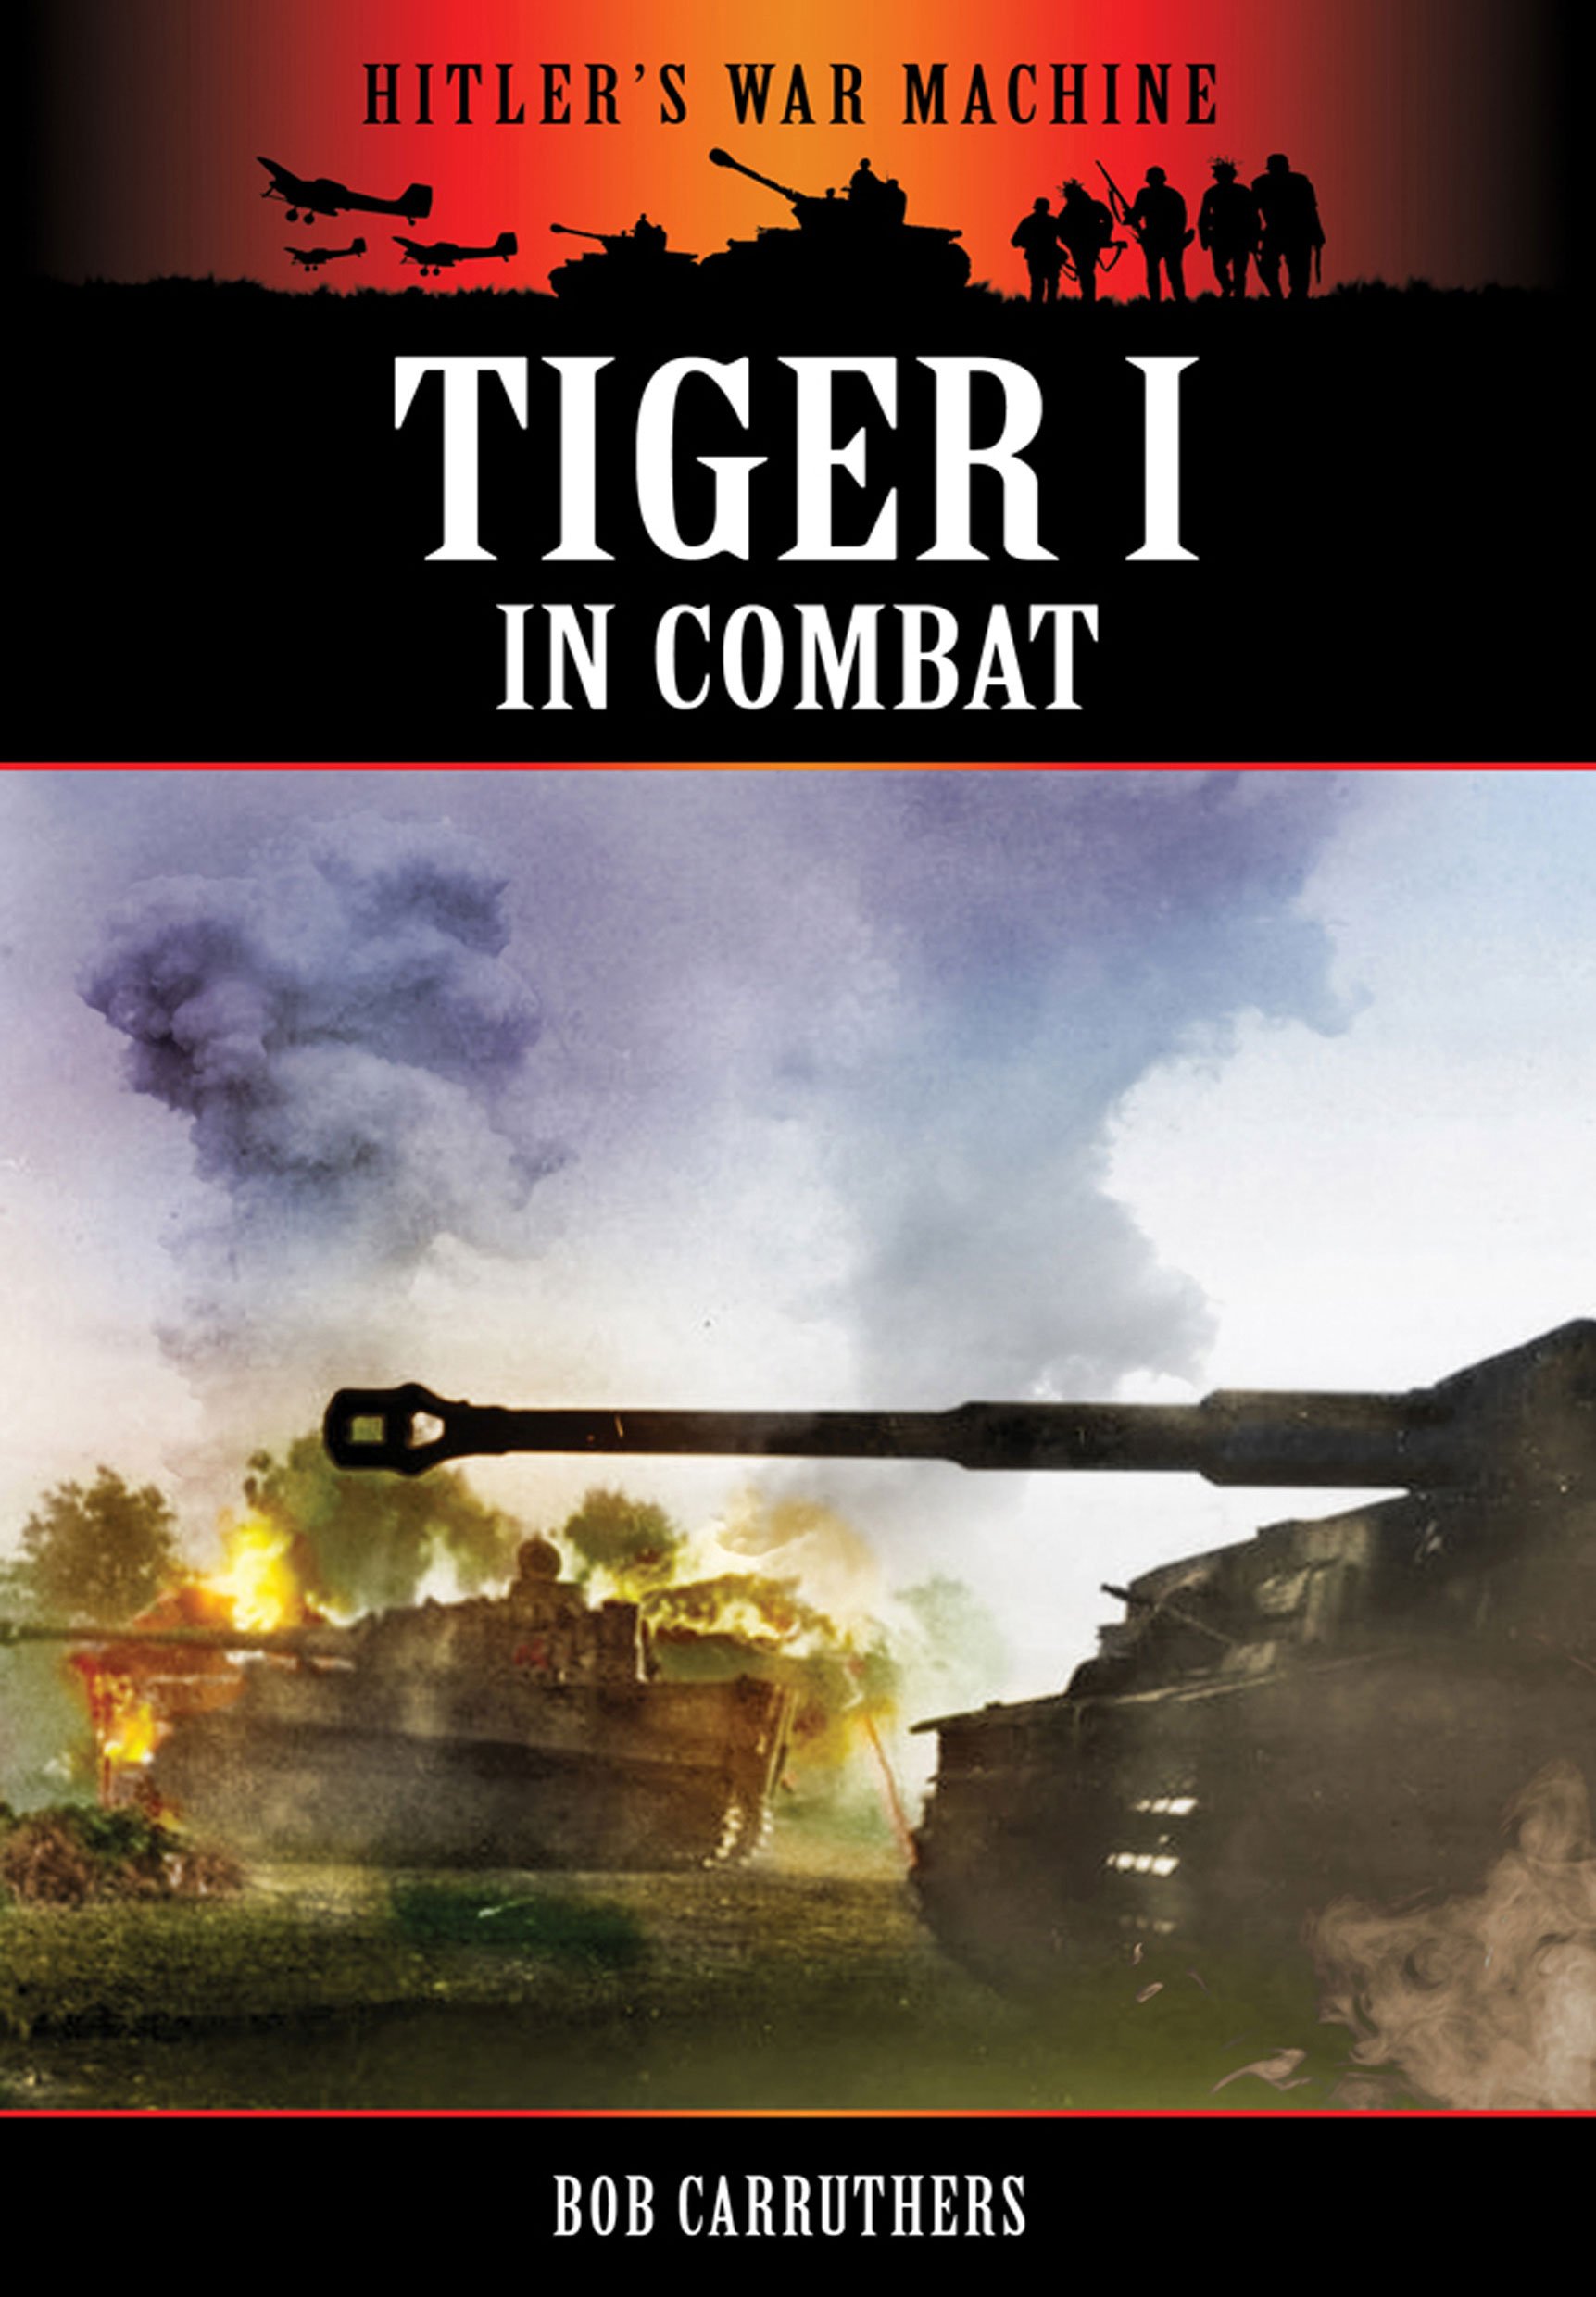 Tiger I In Combat (Hitler’S War Machine)